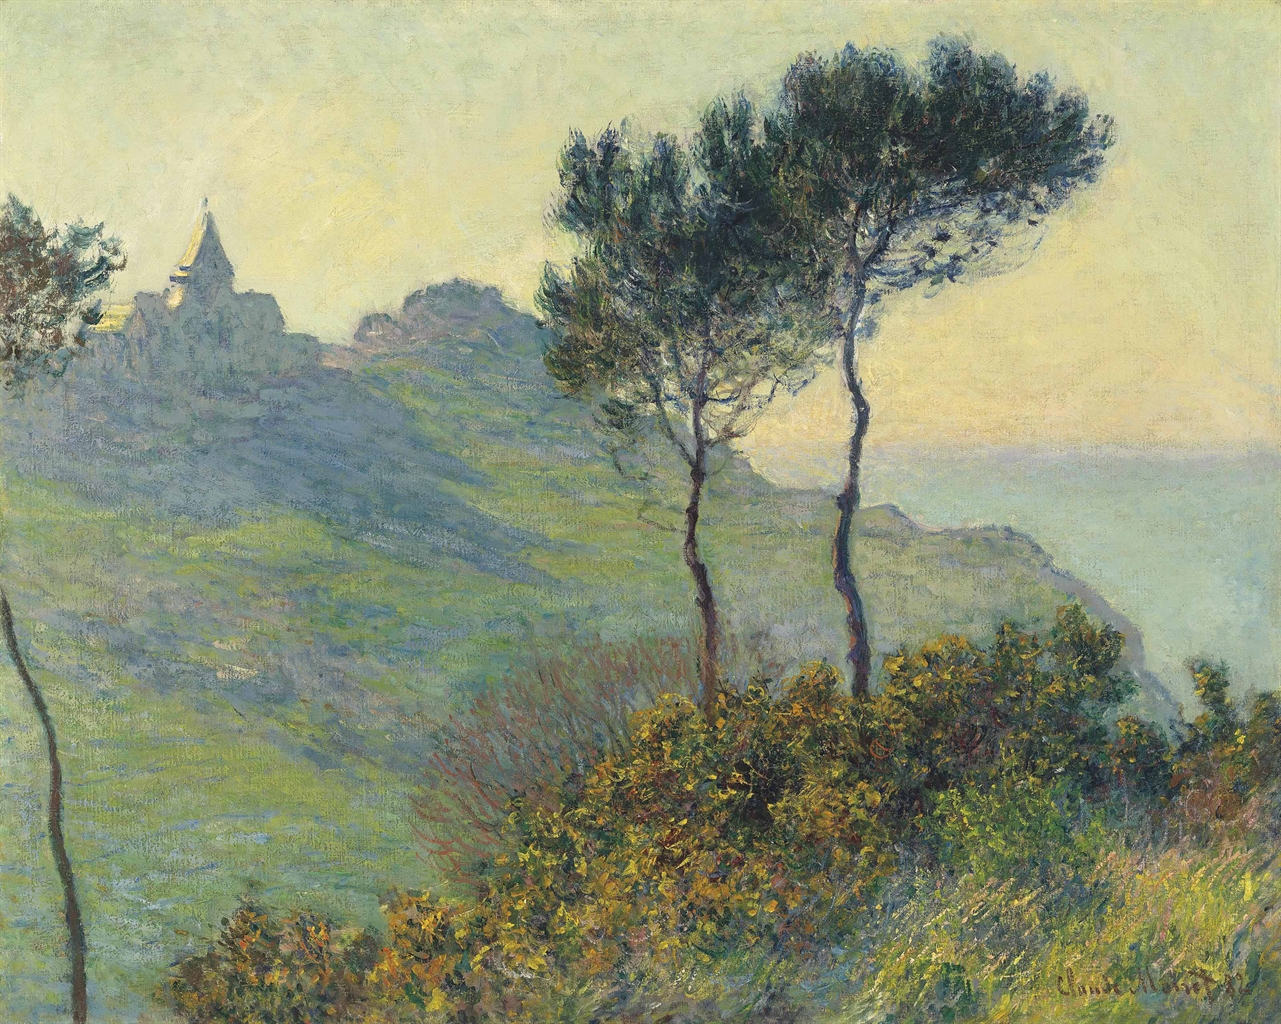 Claude+Monet-1840-1926 (860).jpg